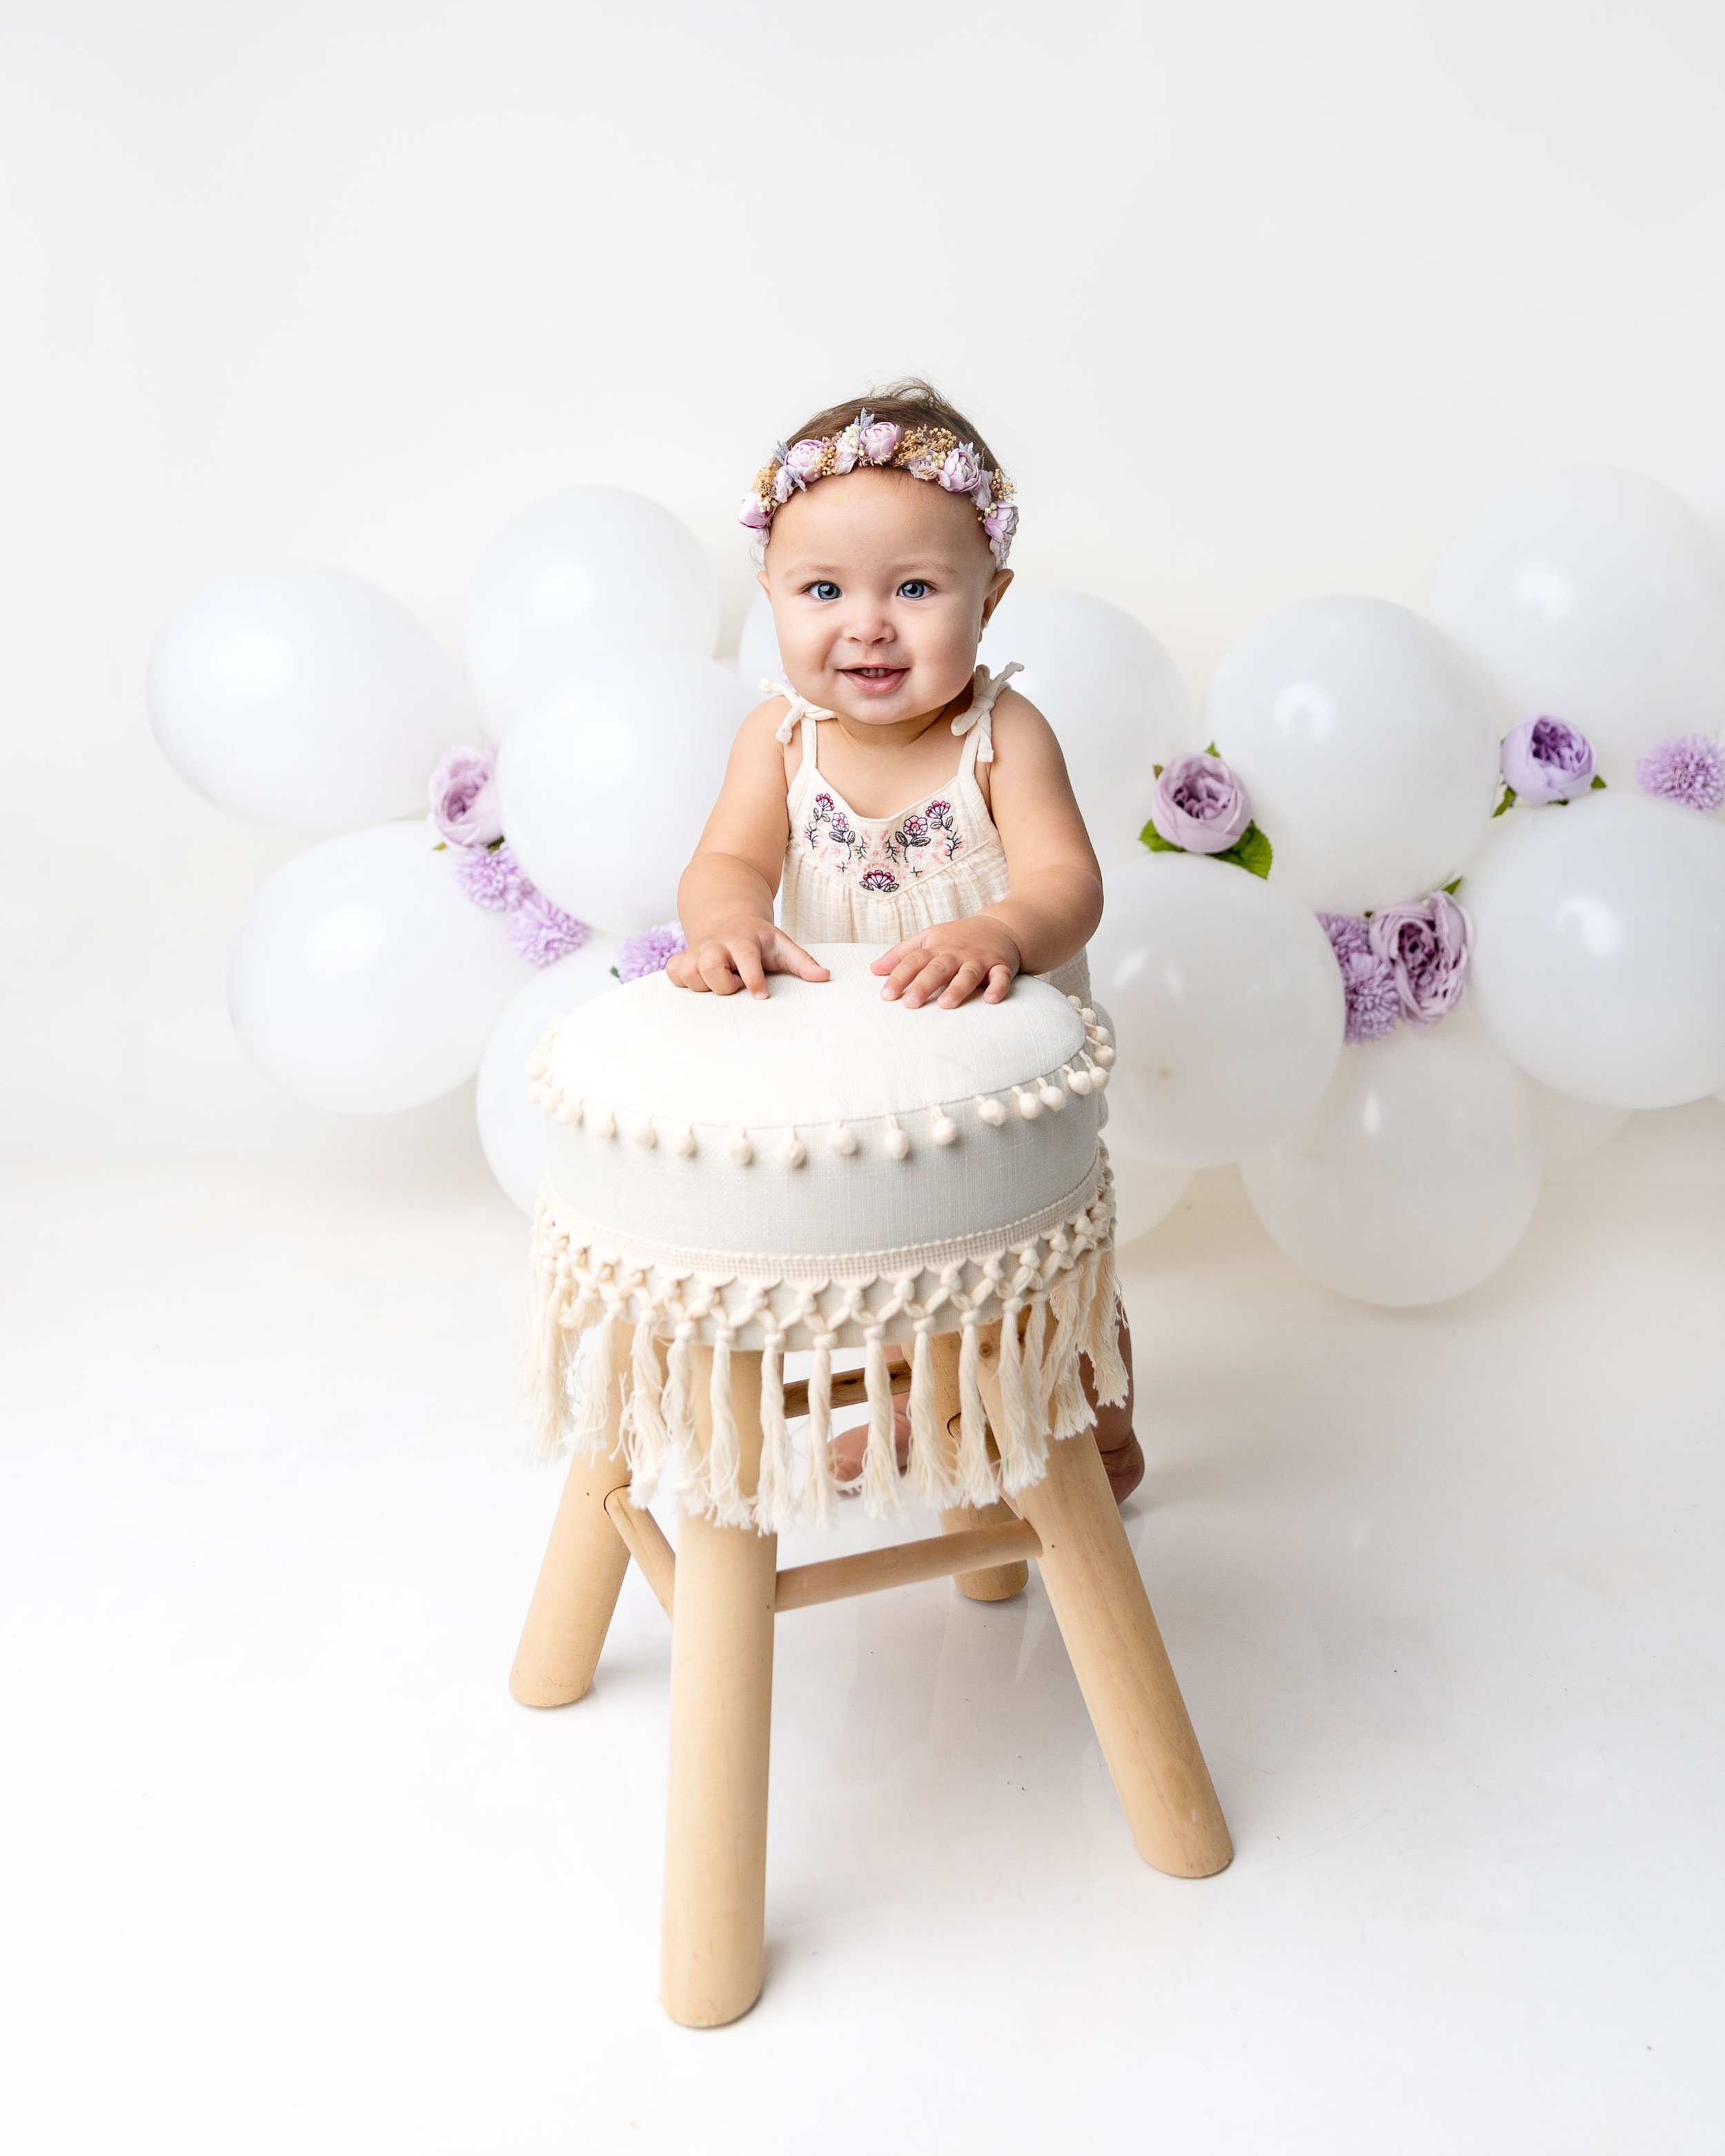 cake-smash-images-first-birthday-photography-baby-images-newborn-photography-spokane-washington-5.jpg